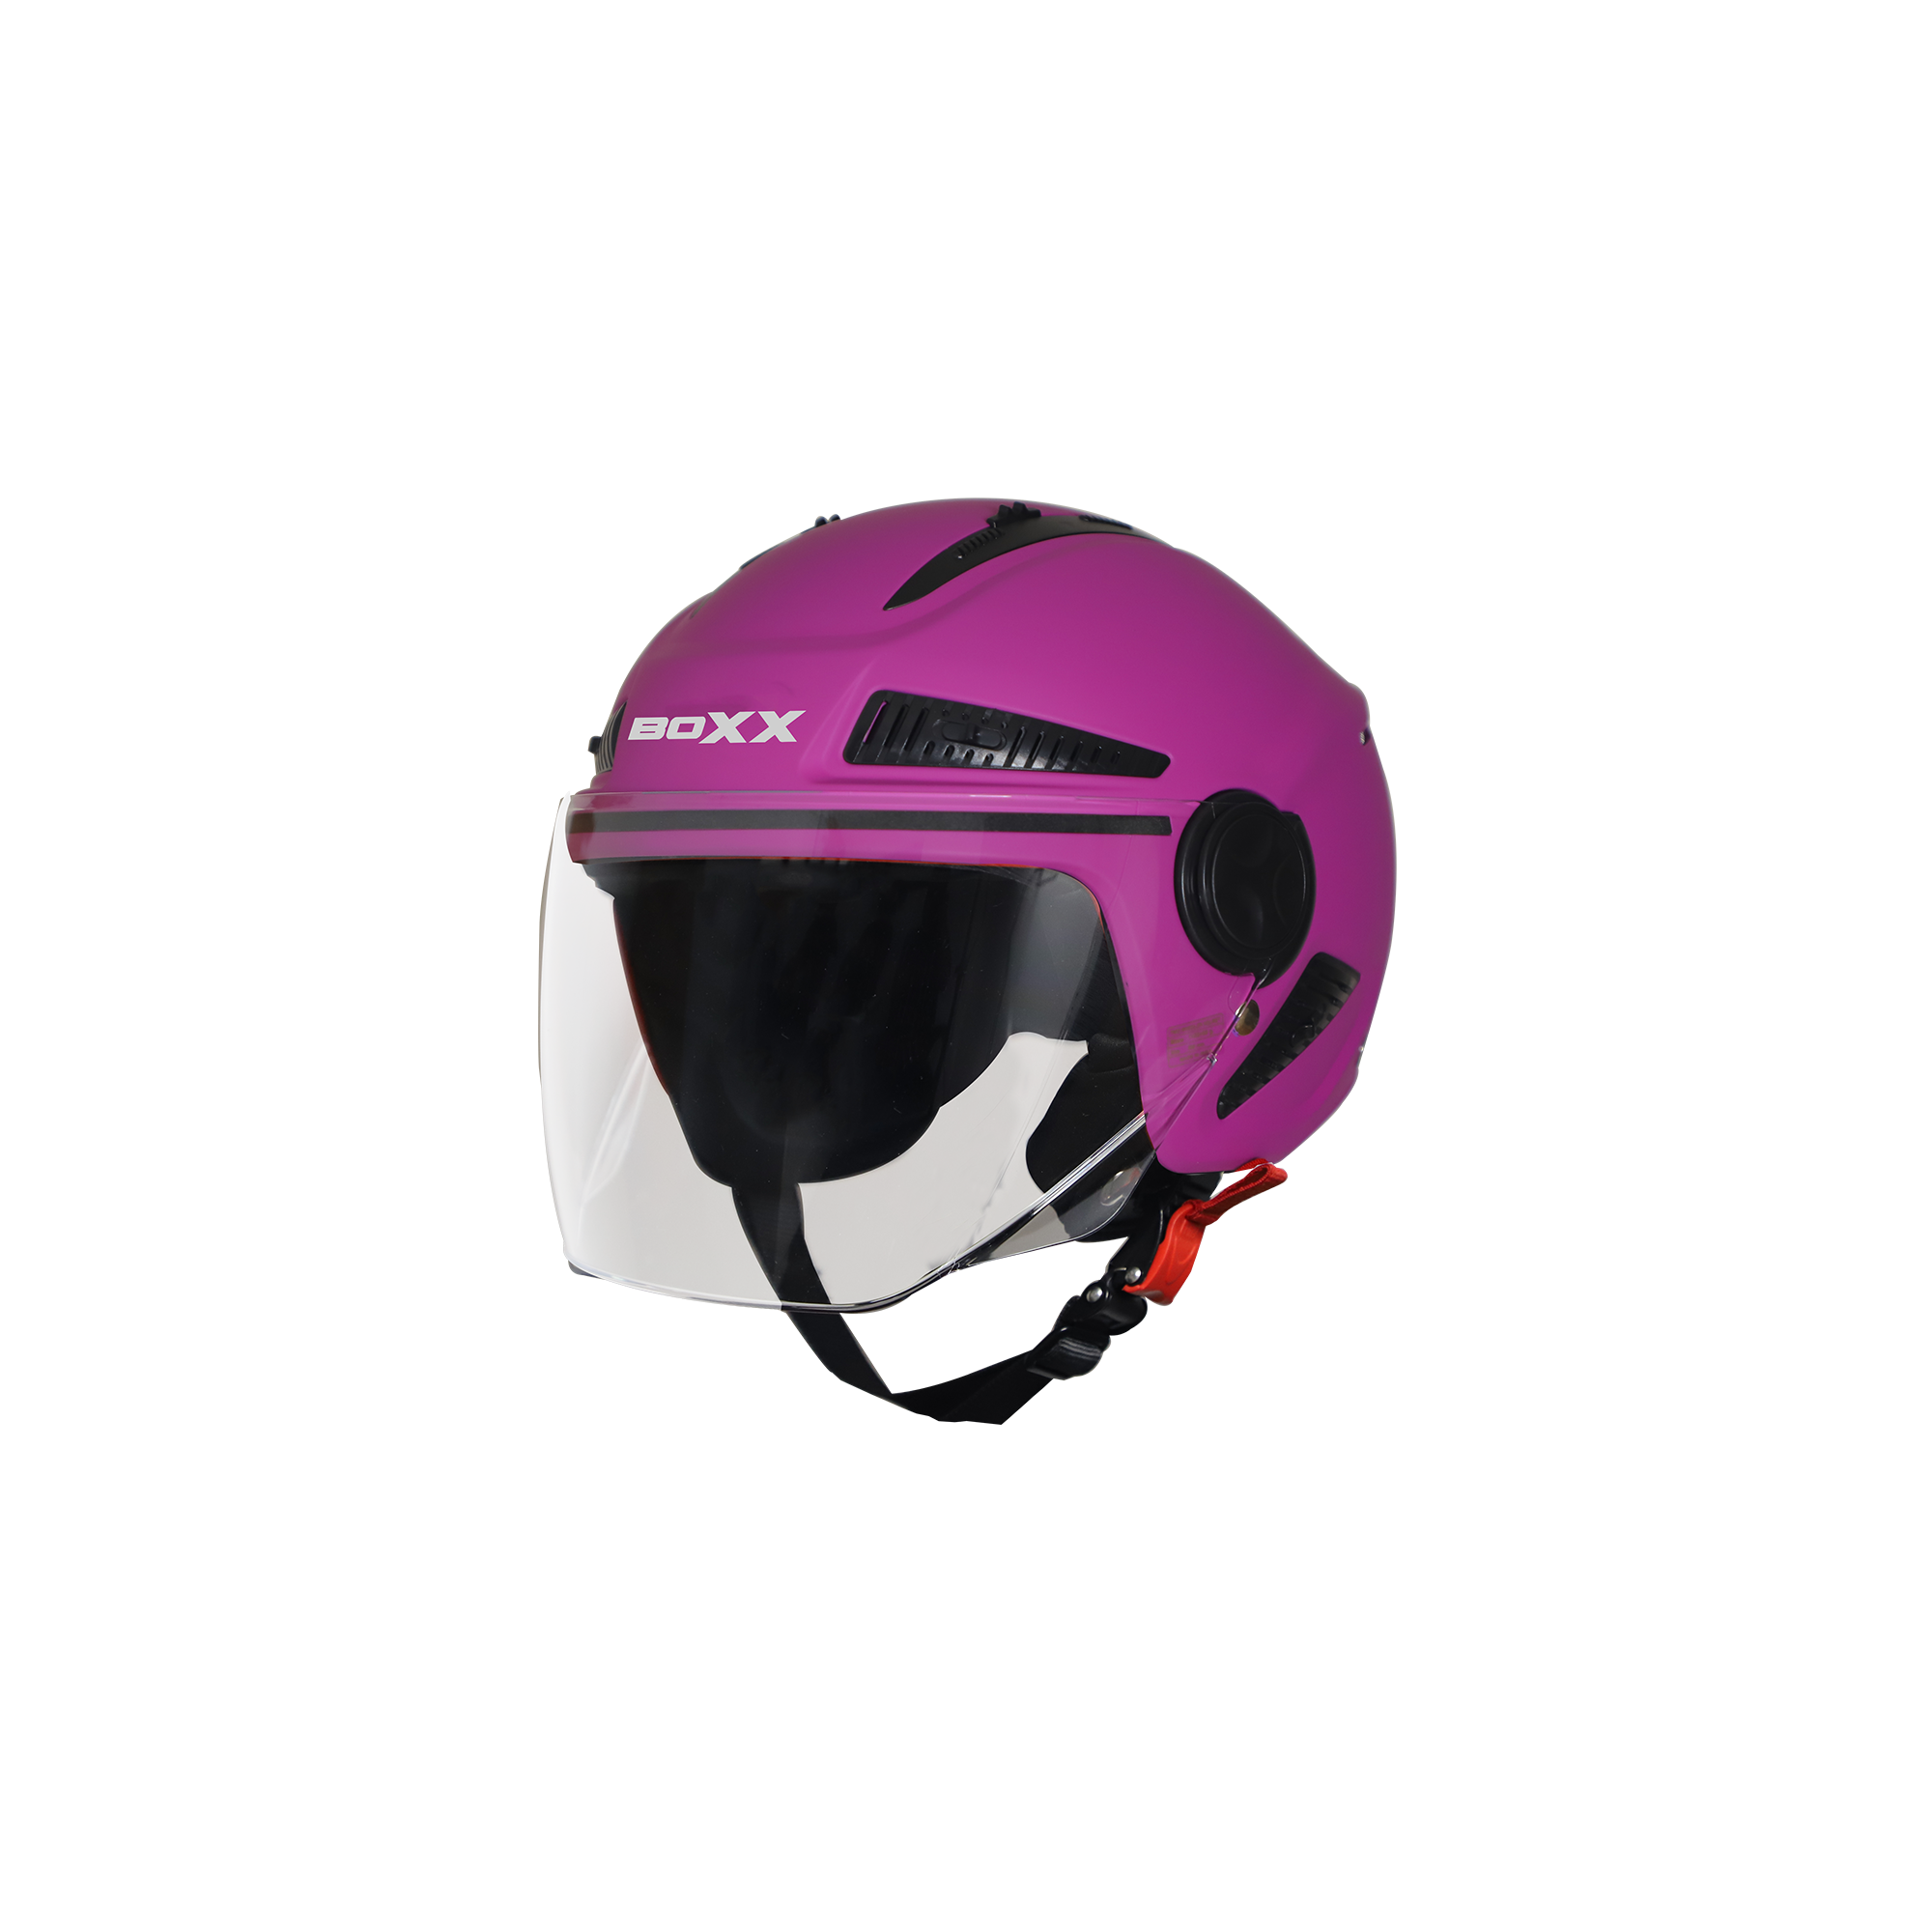 Steelbird SBH-24 Boxx ISI Certified Open Face Helmet For Men And Women (Matt Purple With Clear Visor)